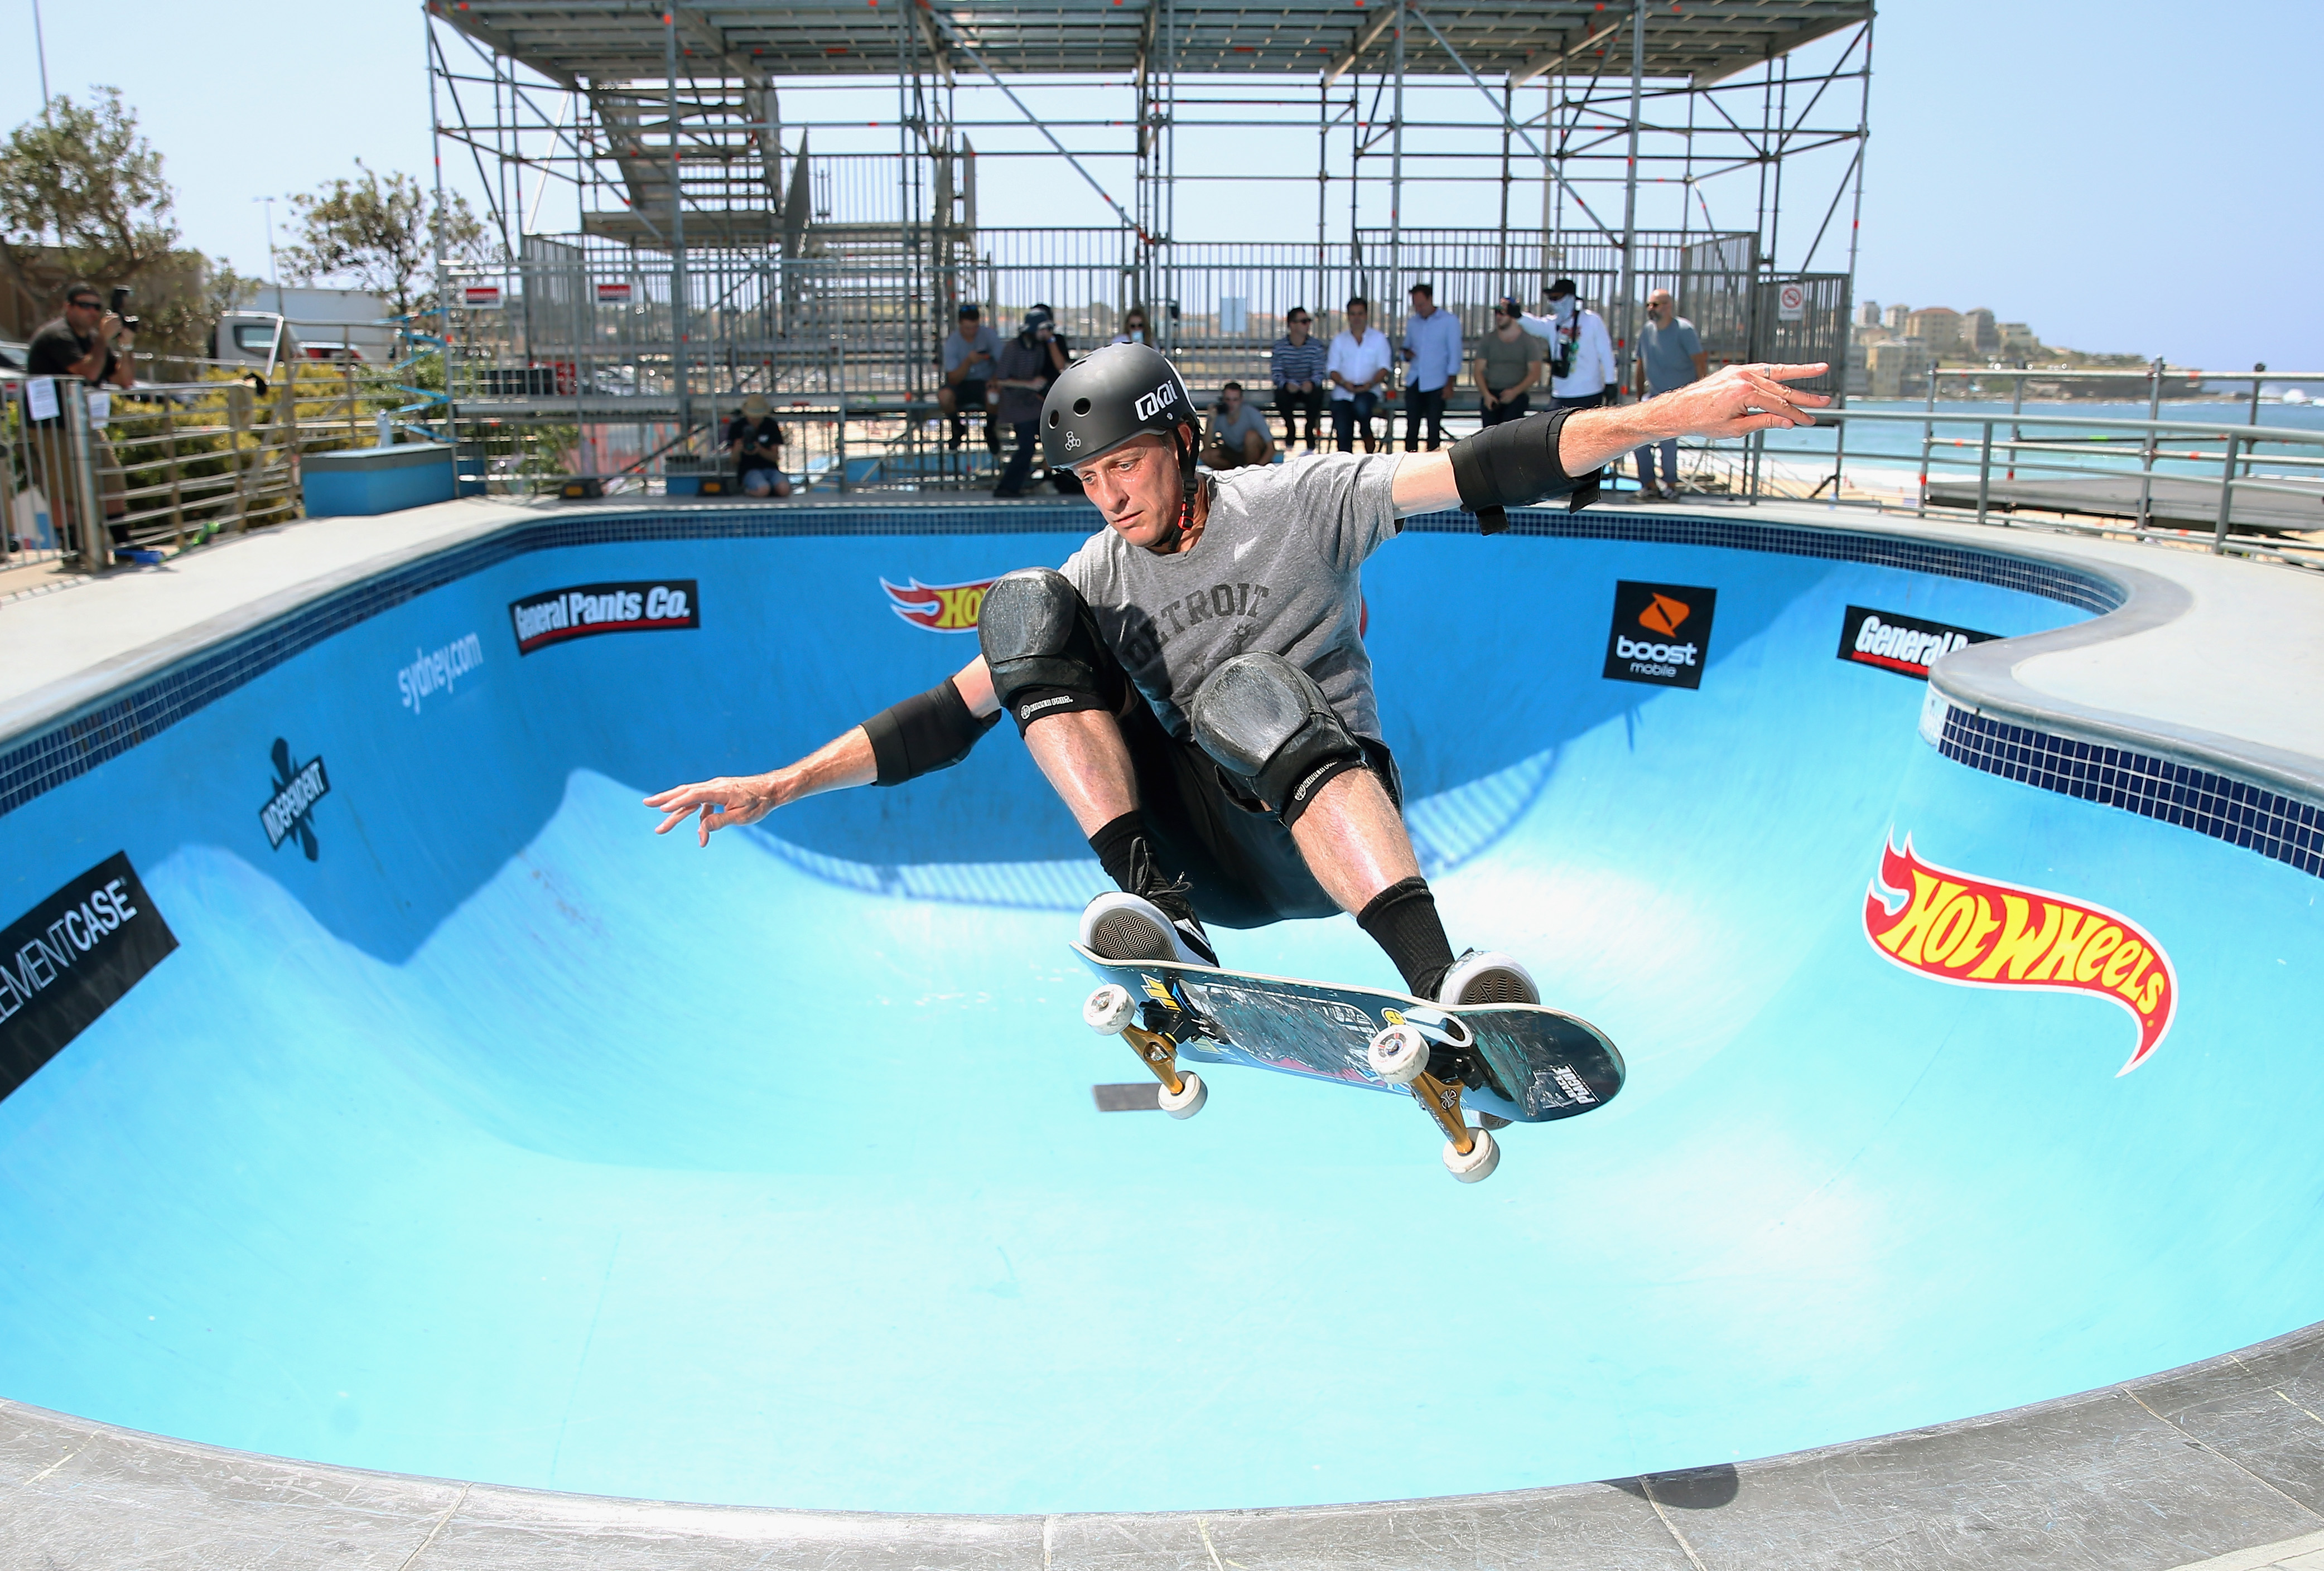 Tony Hawk is building an NFT skatepark in the metaverse